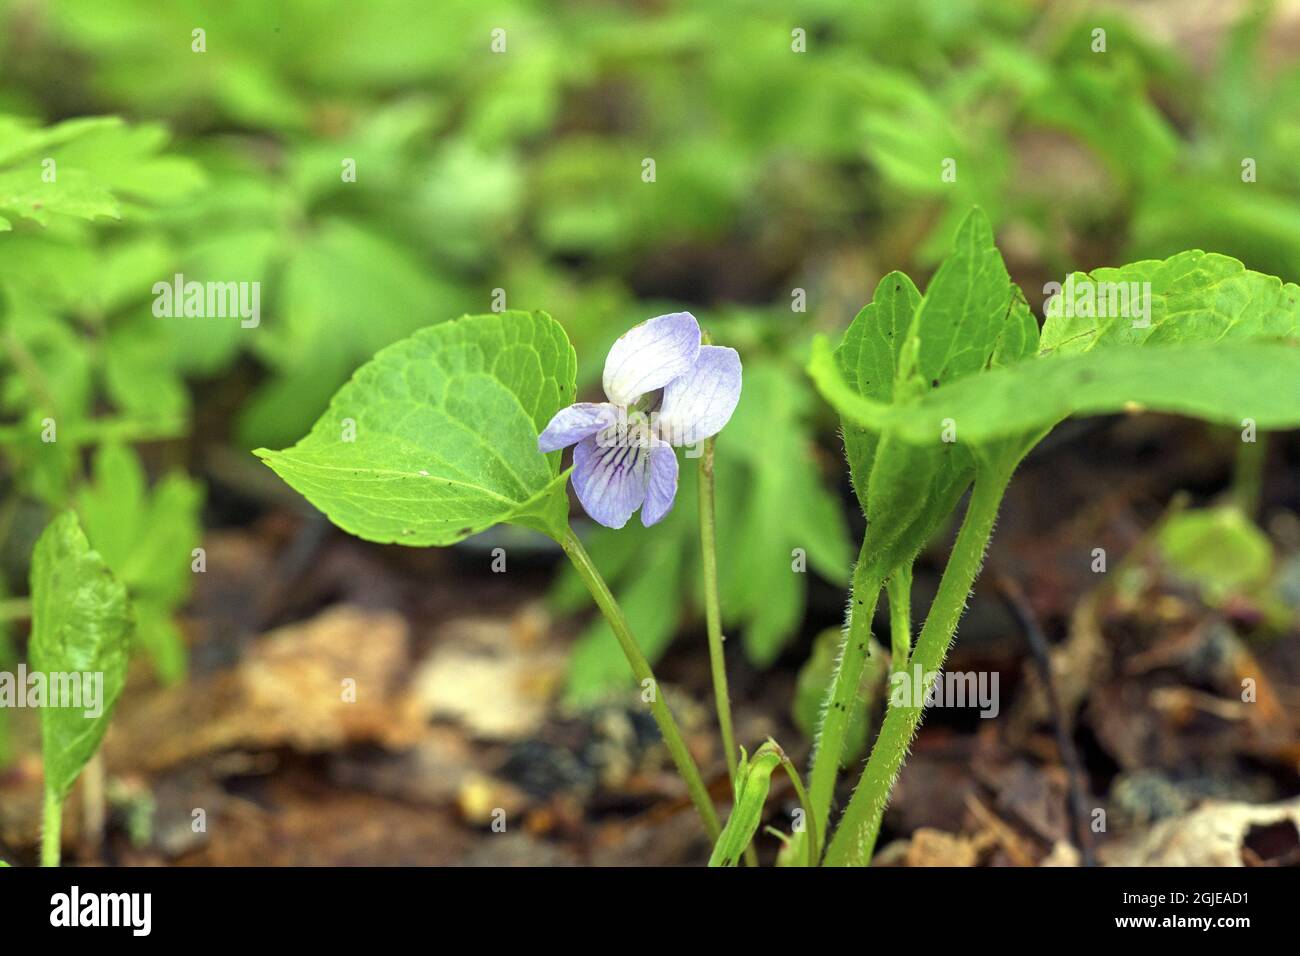 Wonder violet (Viola mirabilis) Photo: Bengt Ekman / TT / code 2706  Stock Photo